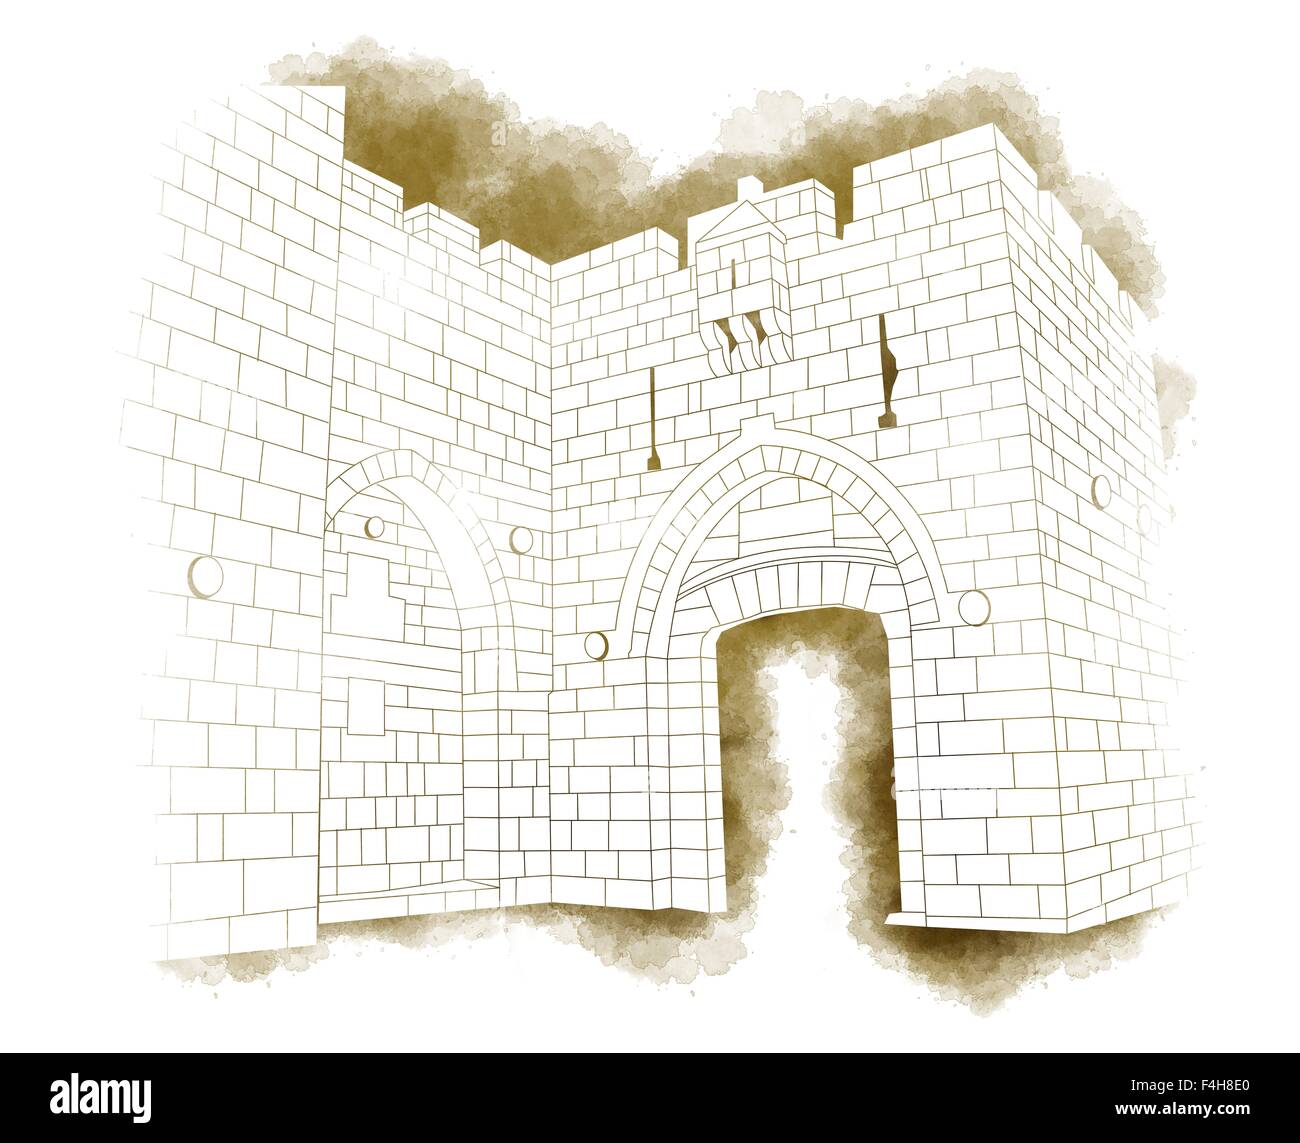 Illustration of Jaffa Gate in Old city of Jerusalem, Israel Stock Photo